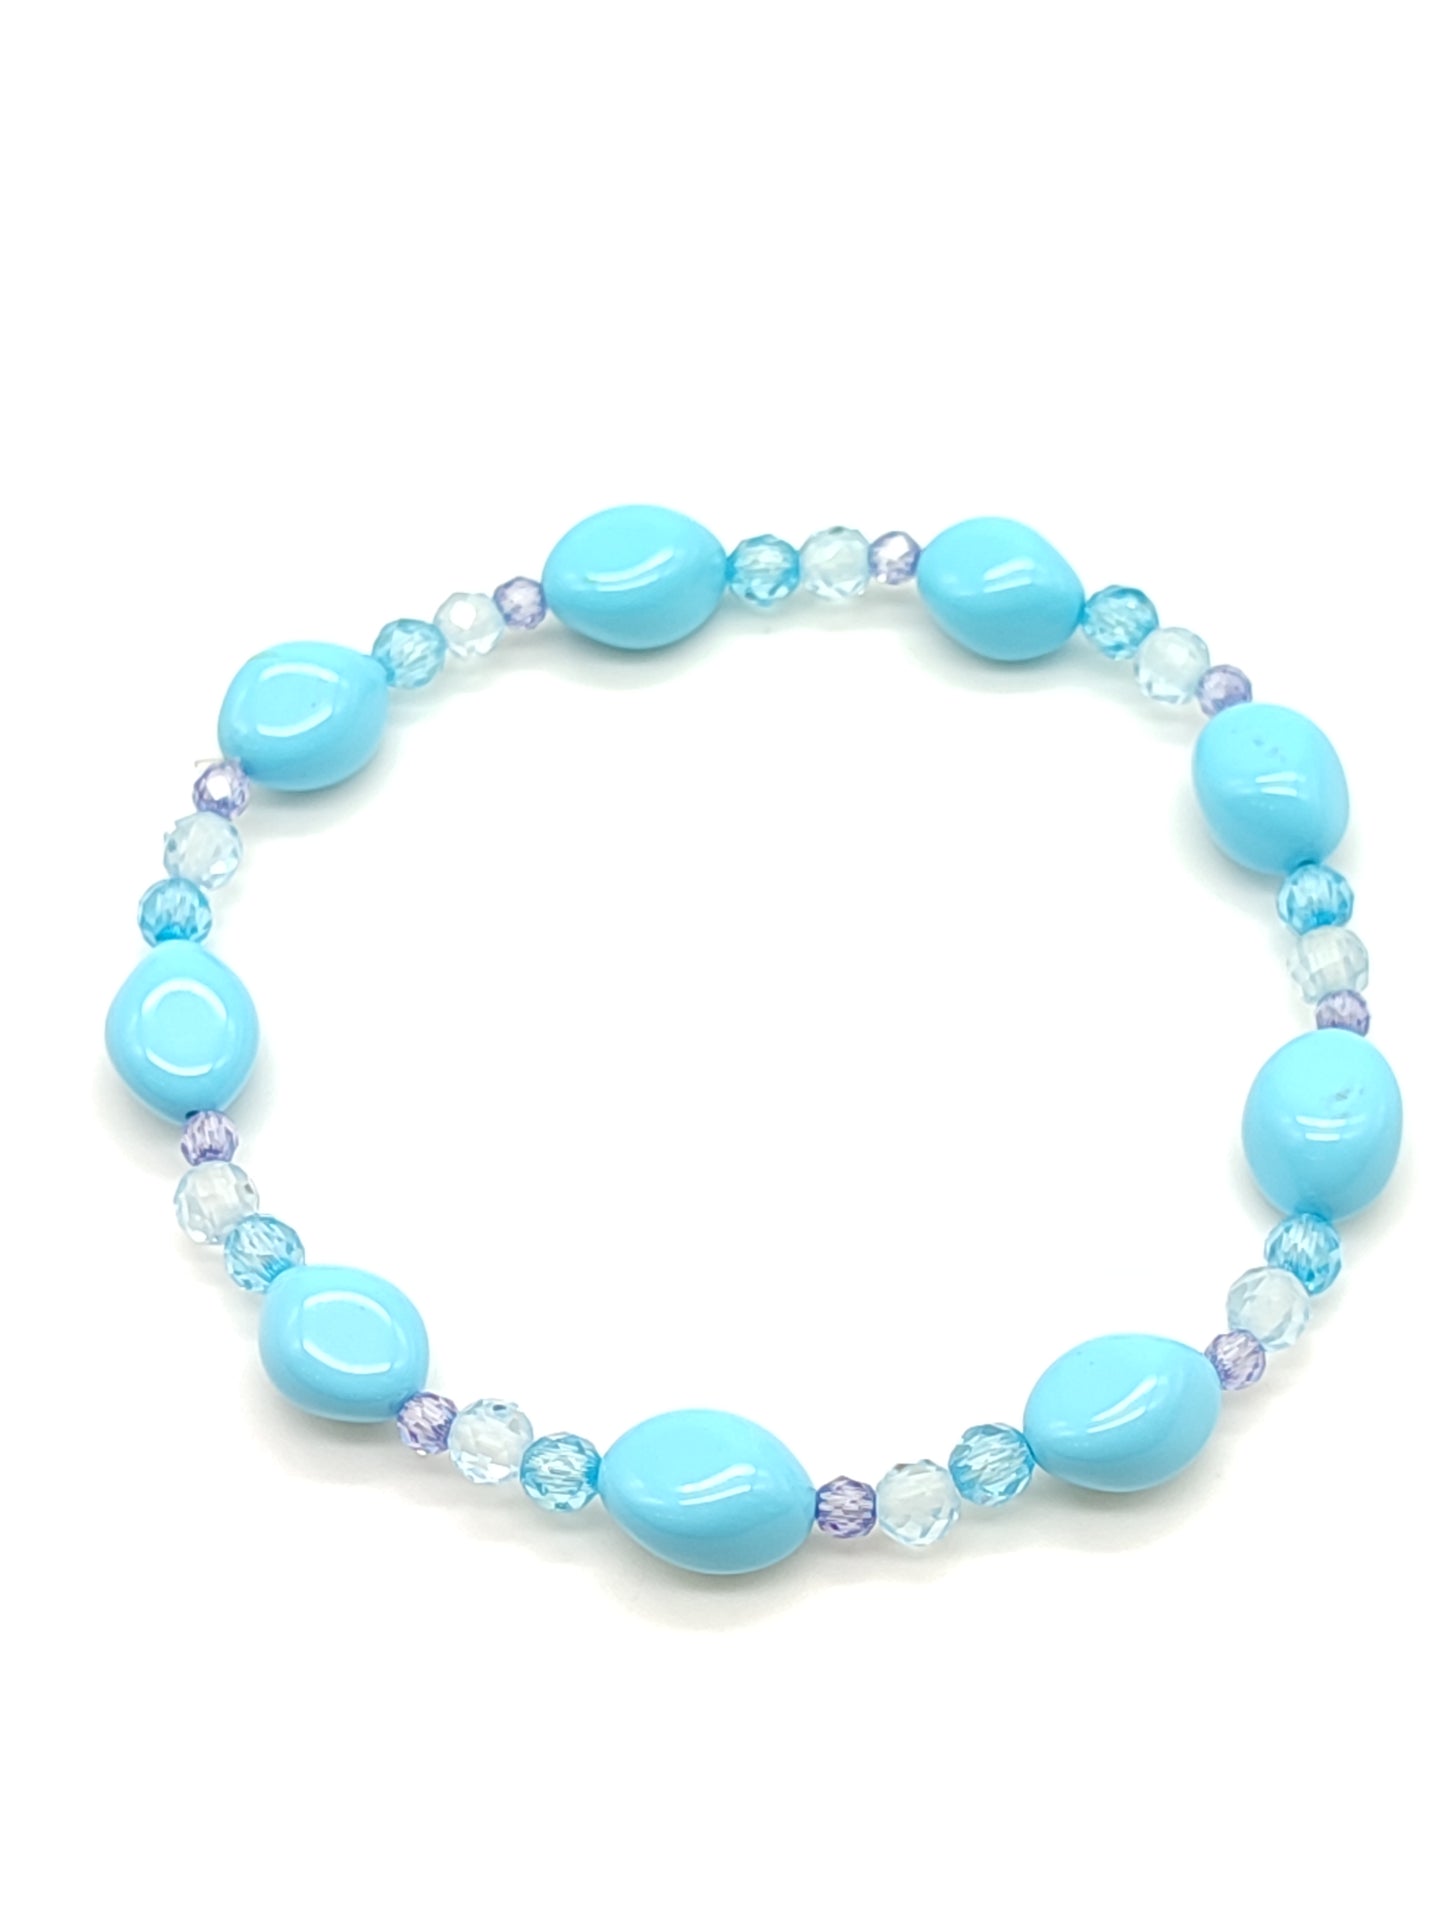 Sea bracelet with turquoises and zircons